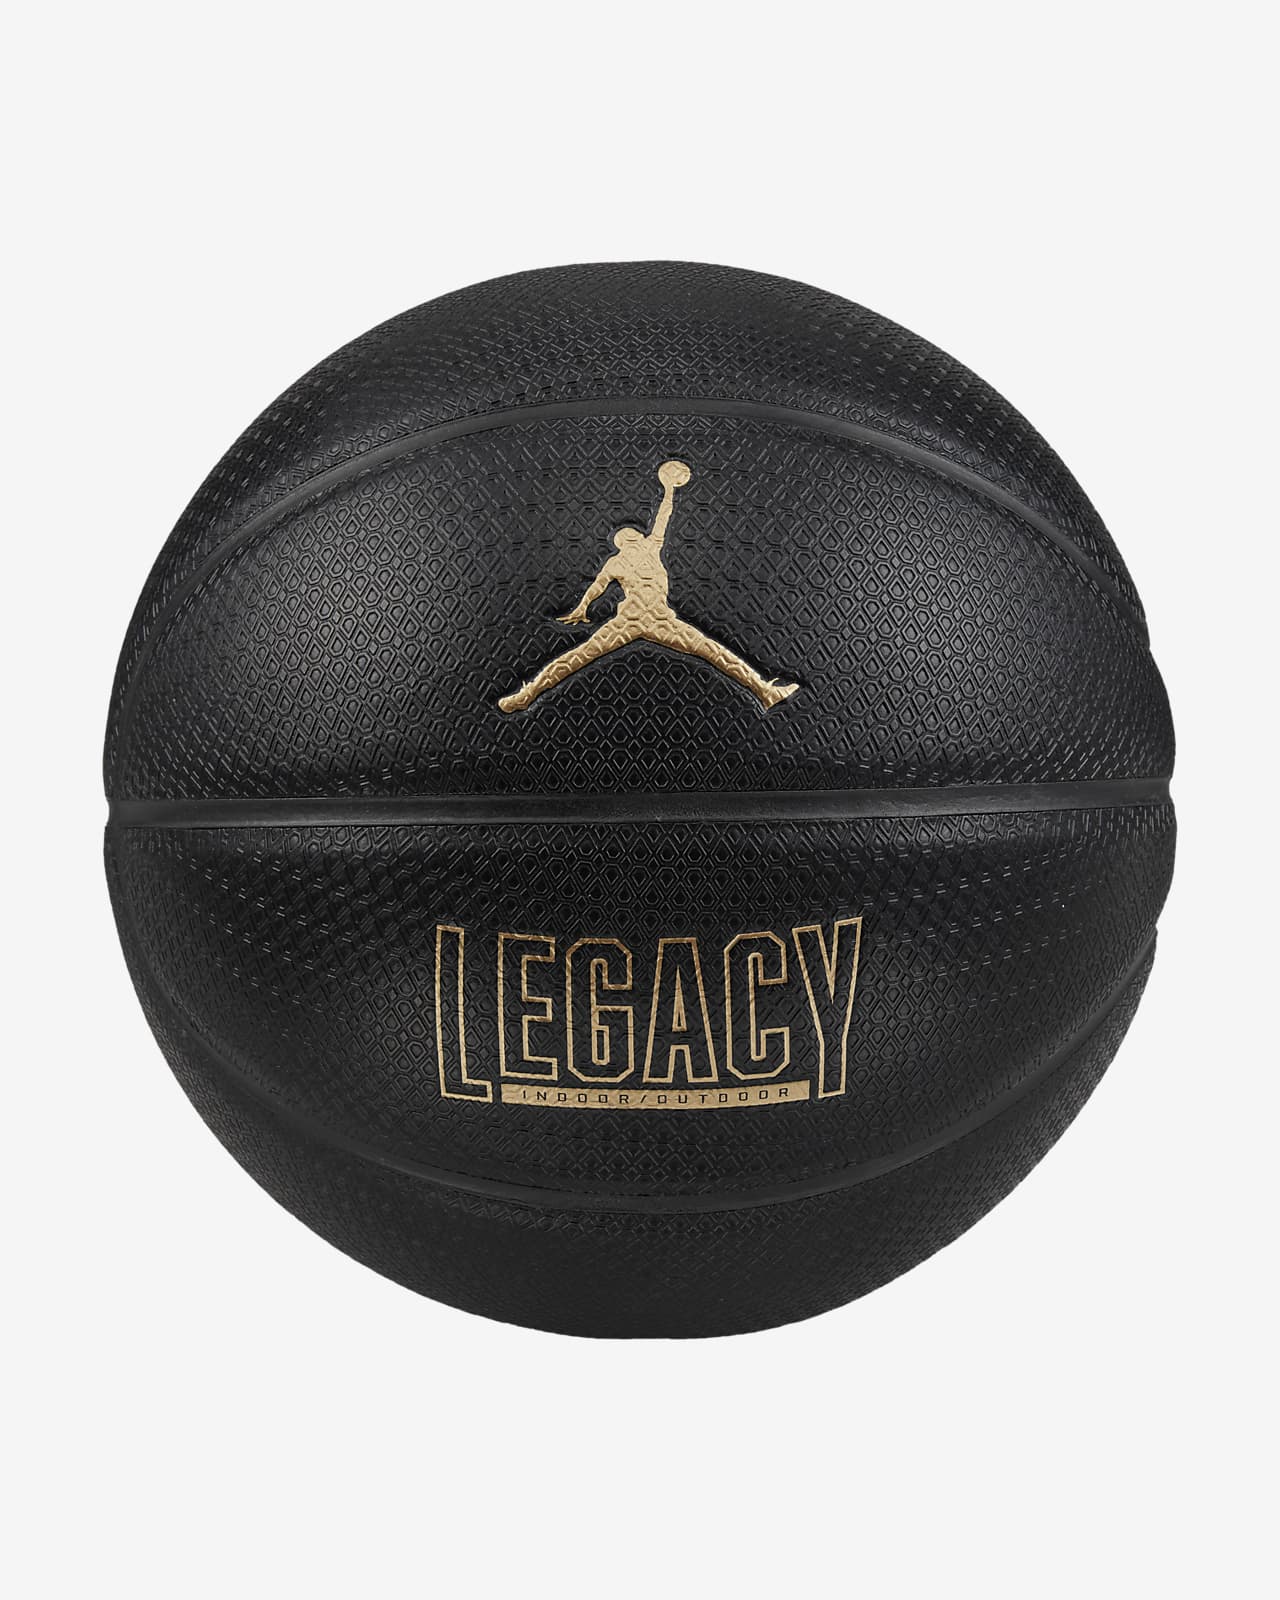 Jordan Legacy 8P Basketball.